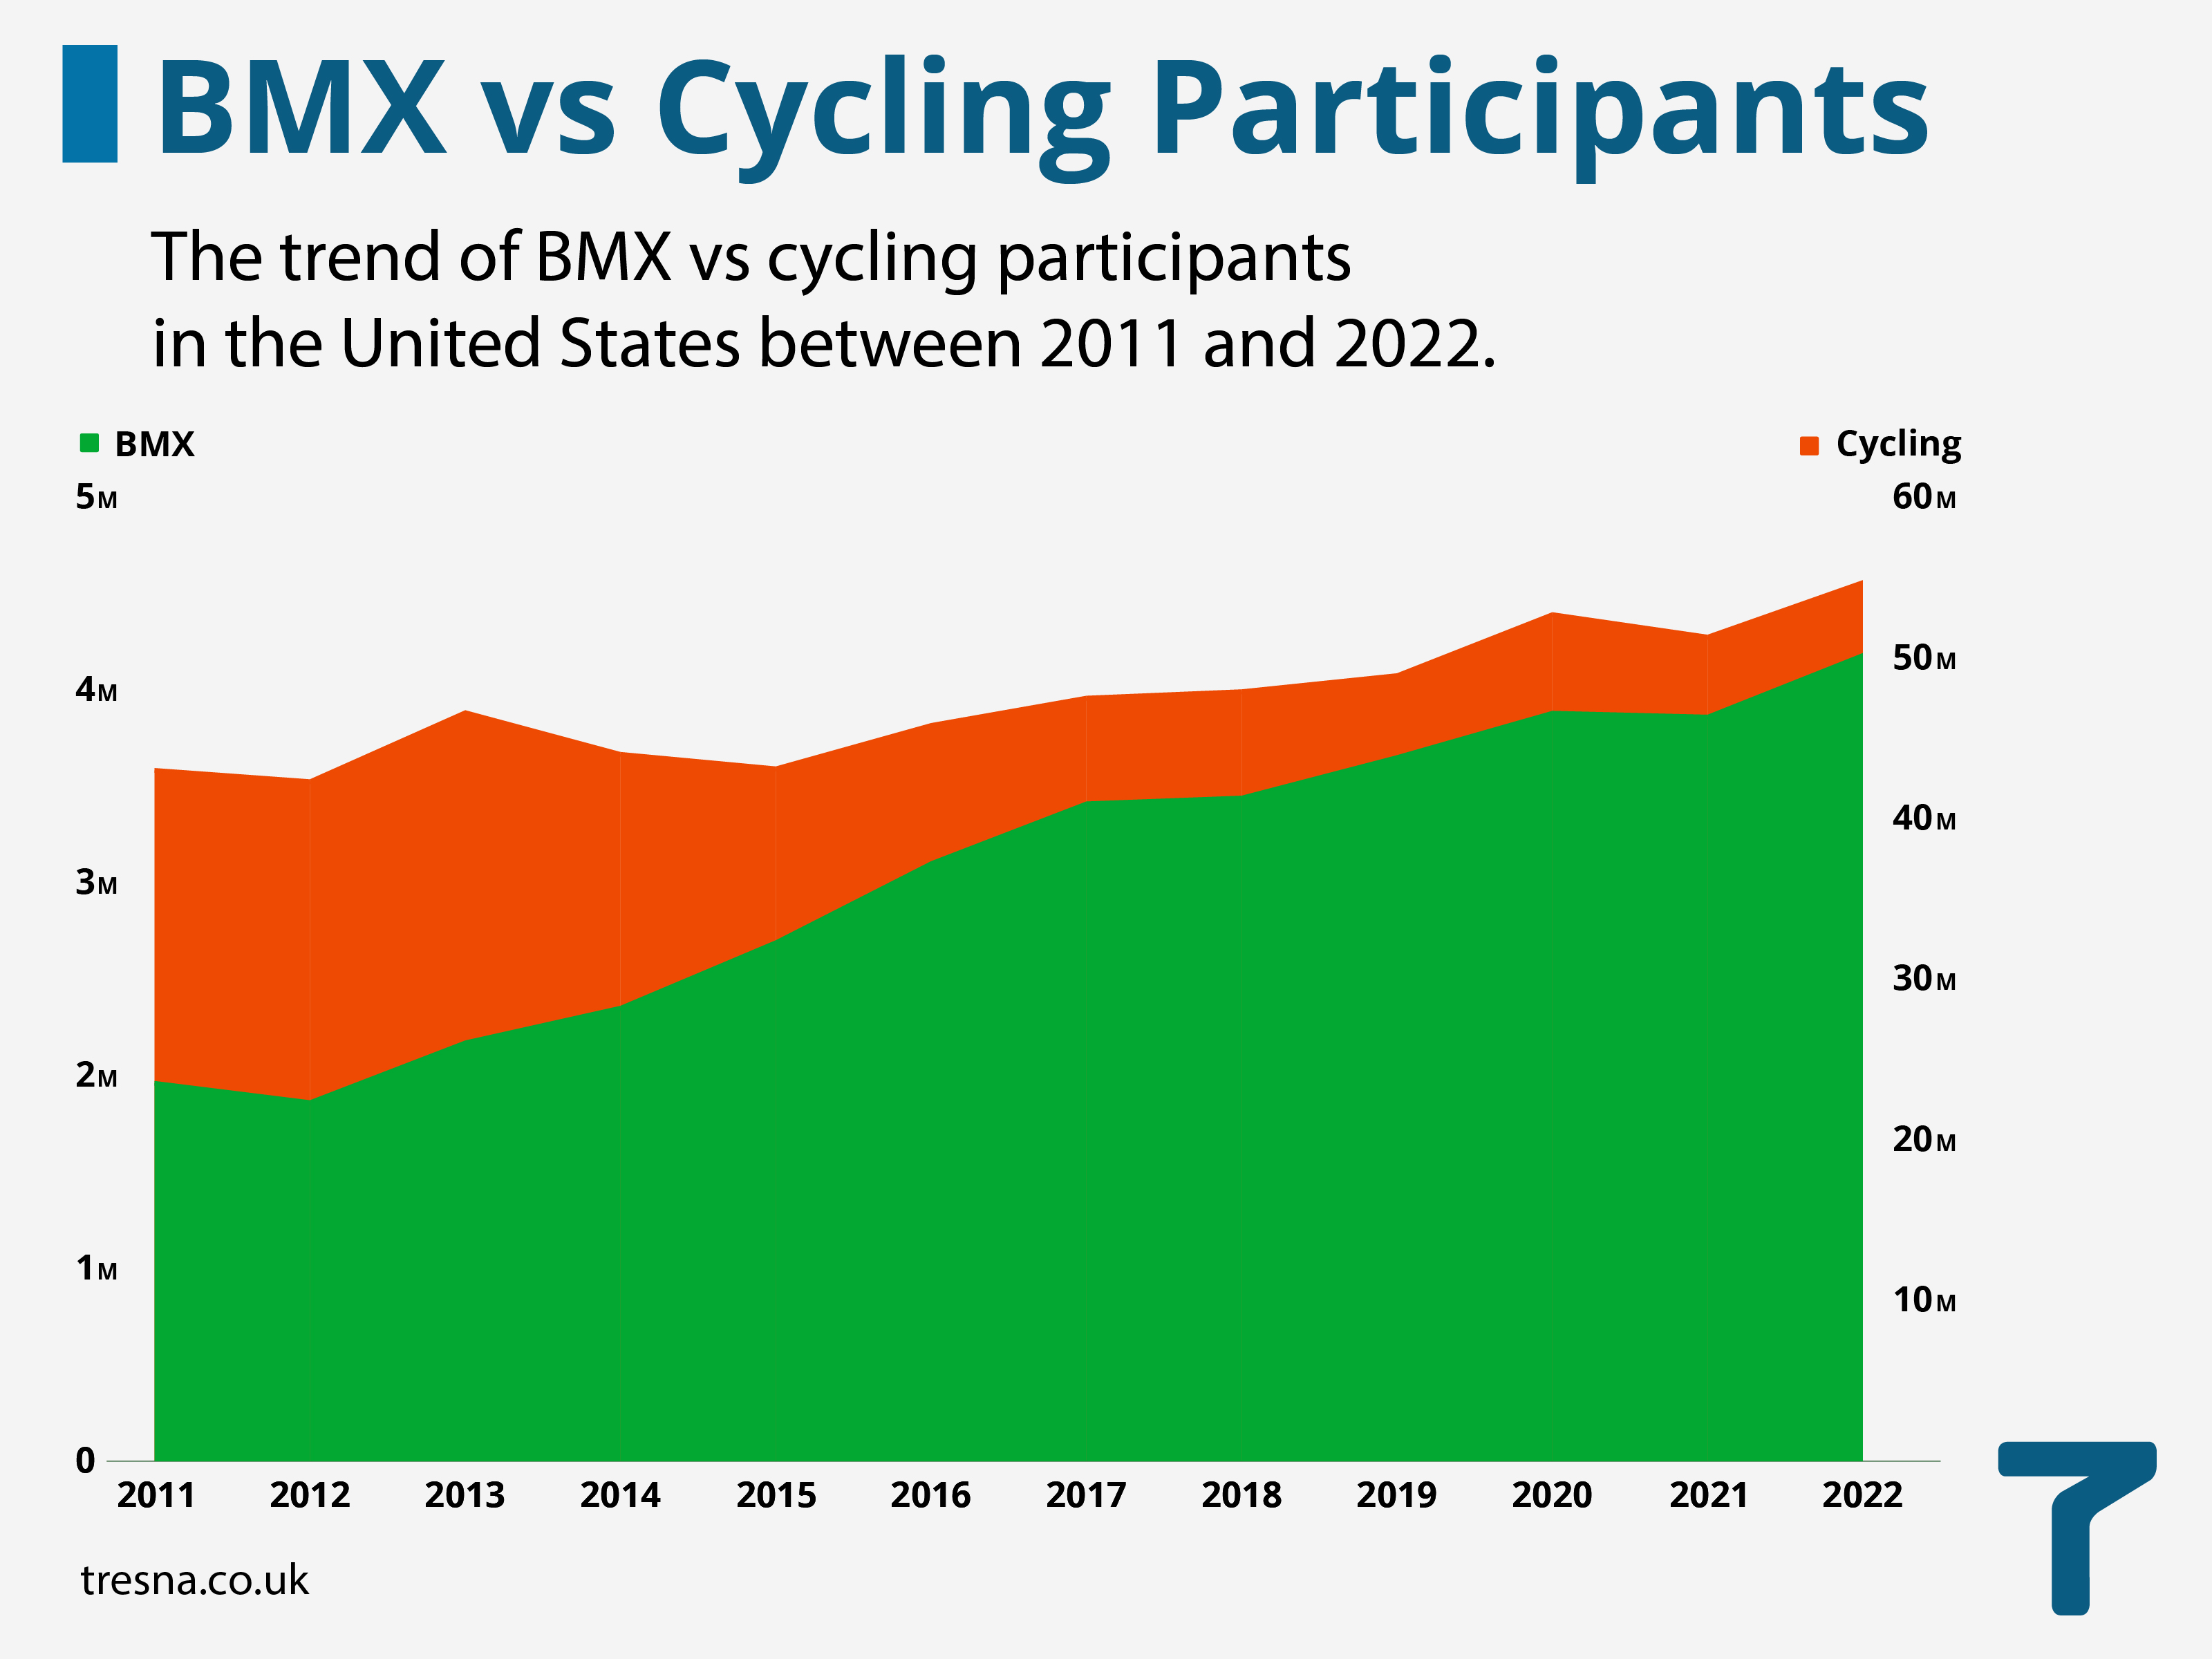 BMX popularity